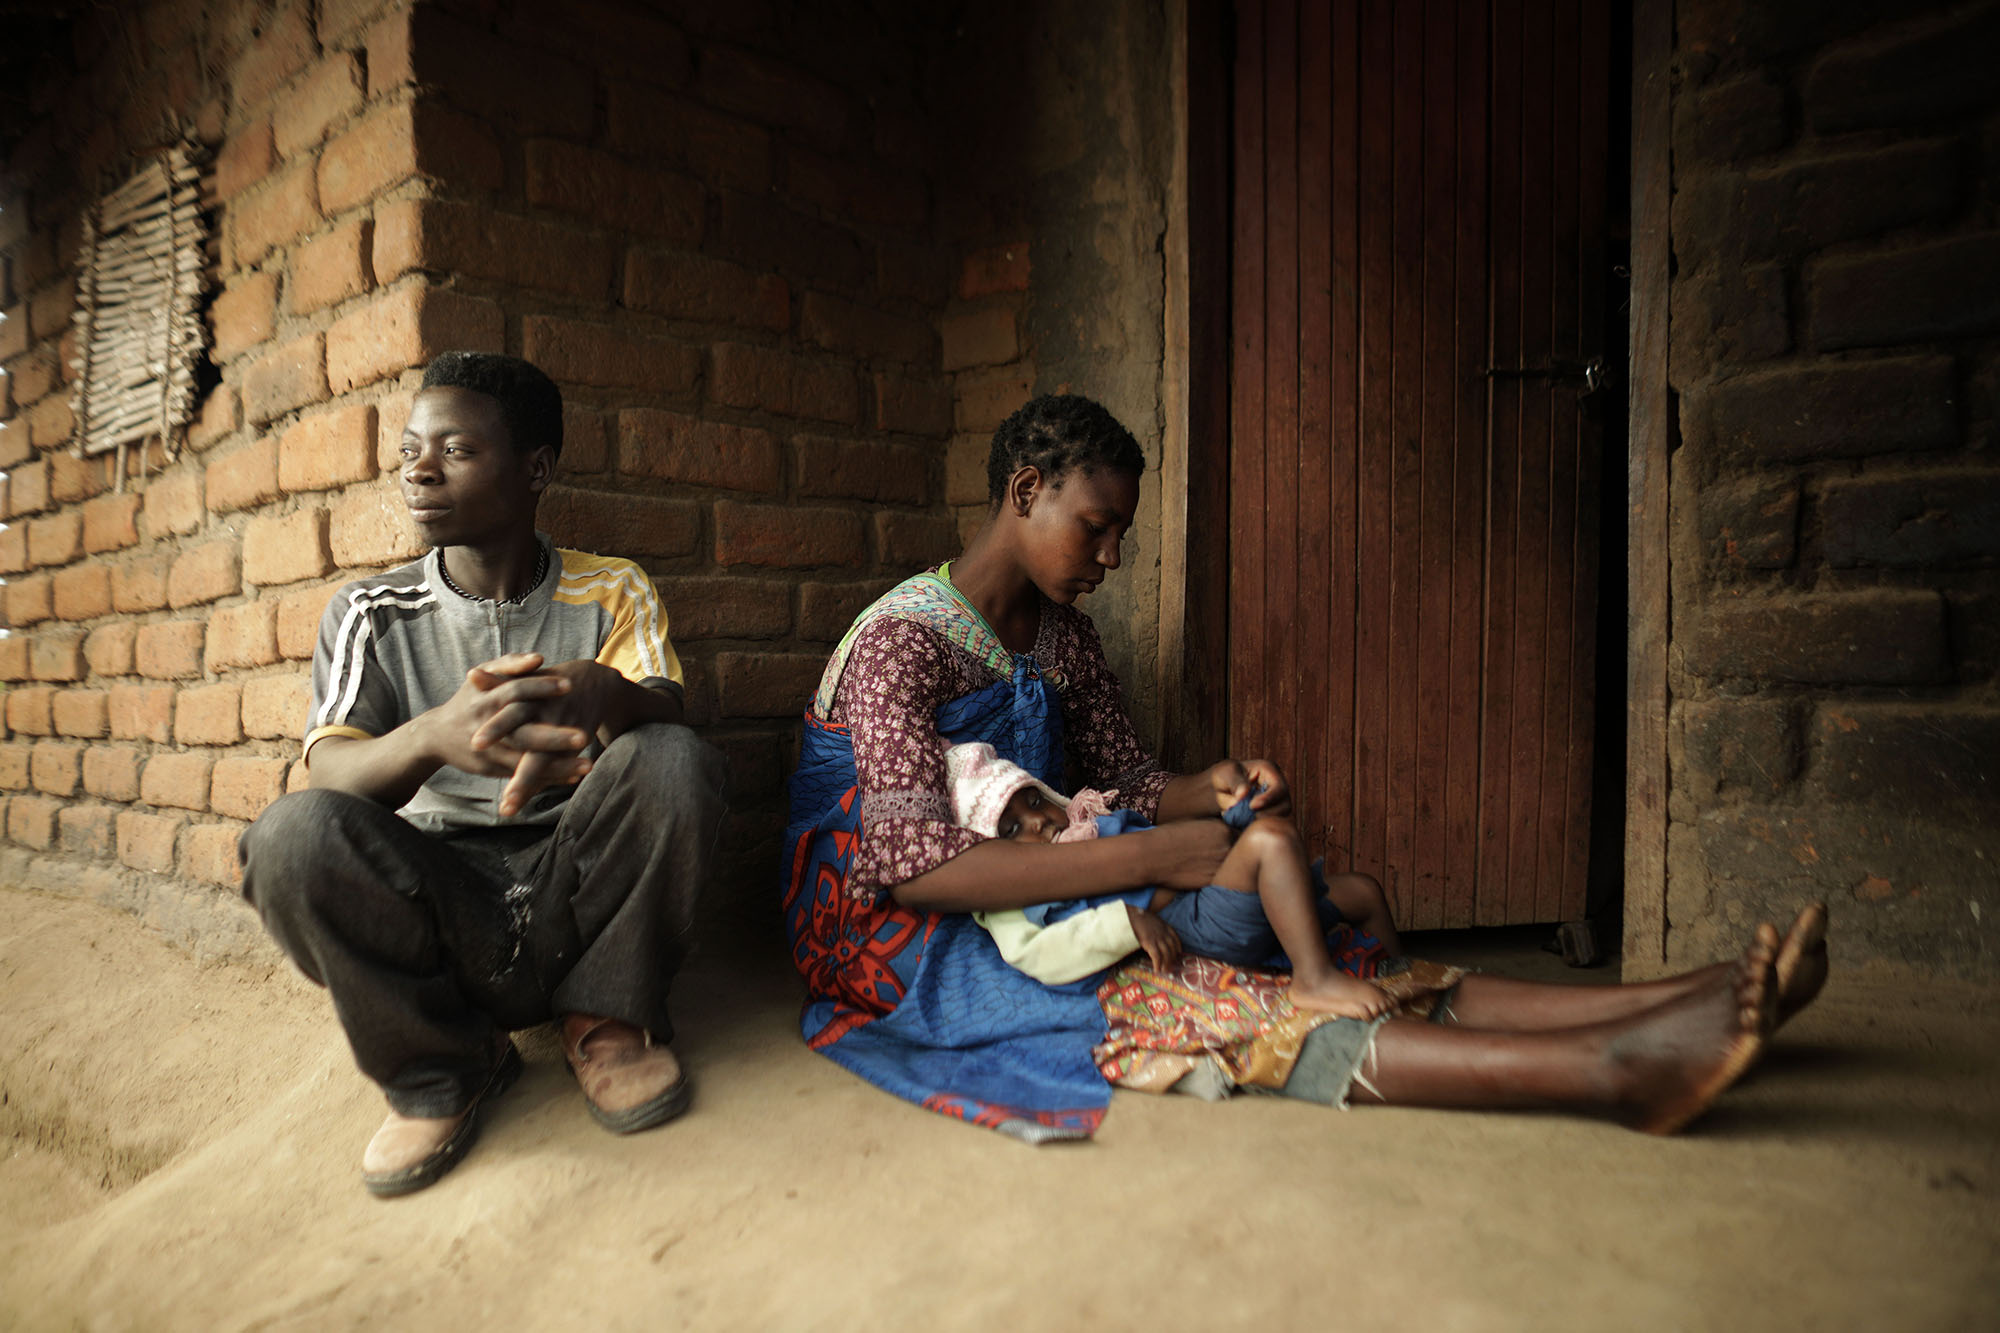  Mariam Chinguwo holds her daughter, Maness, while her husband, Hastings Sandikonda, looks on. 